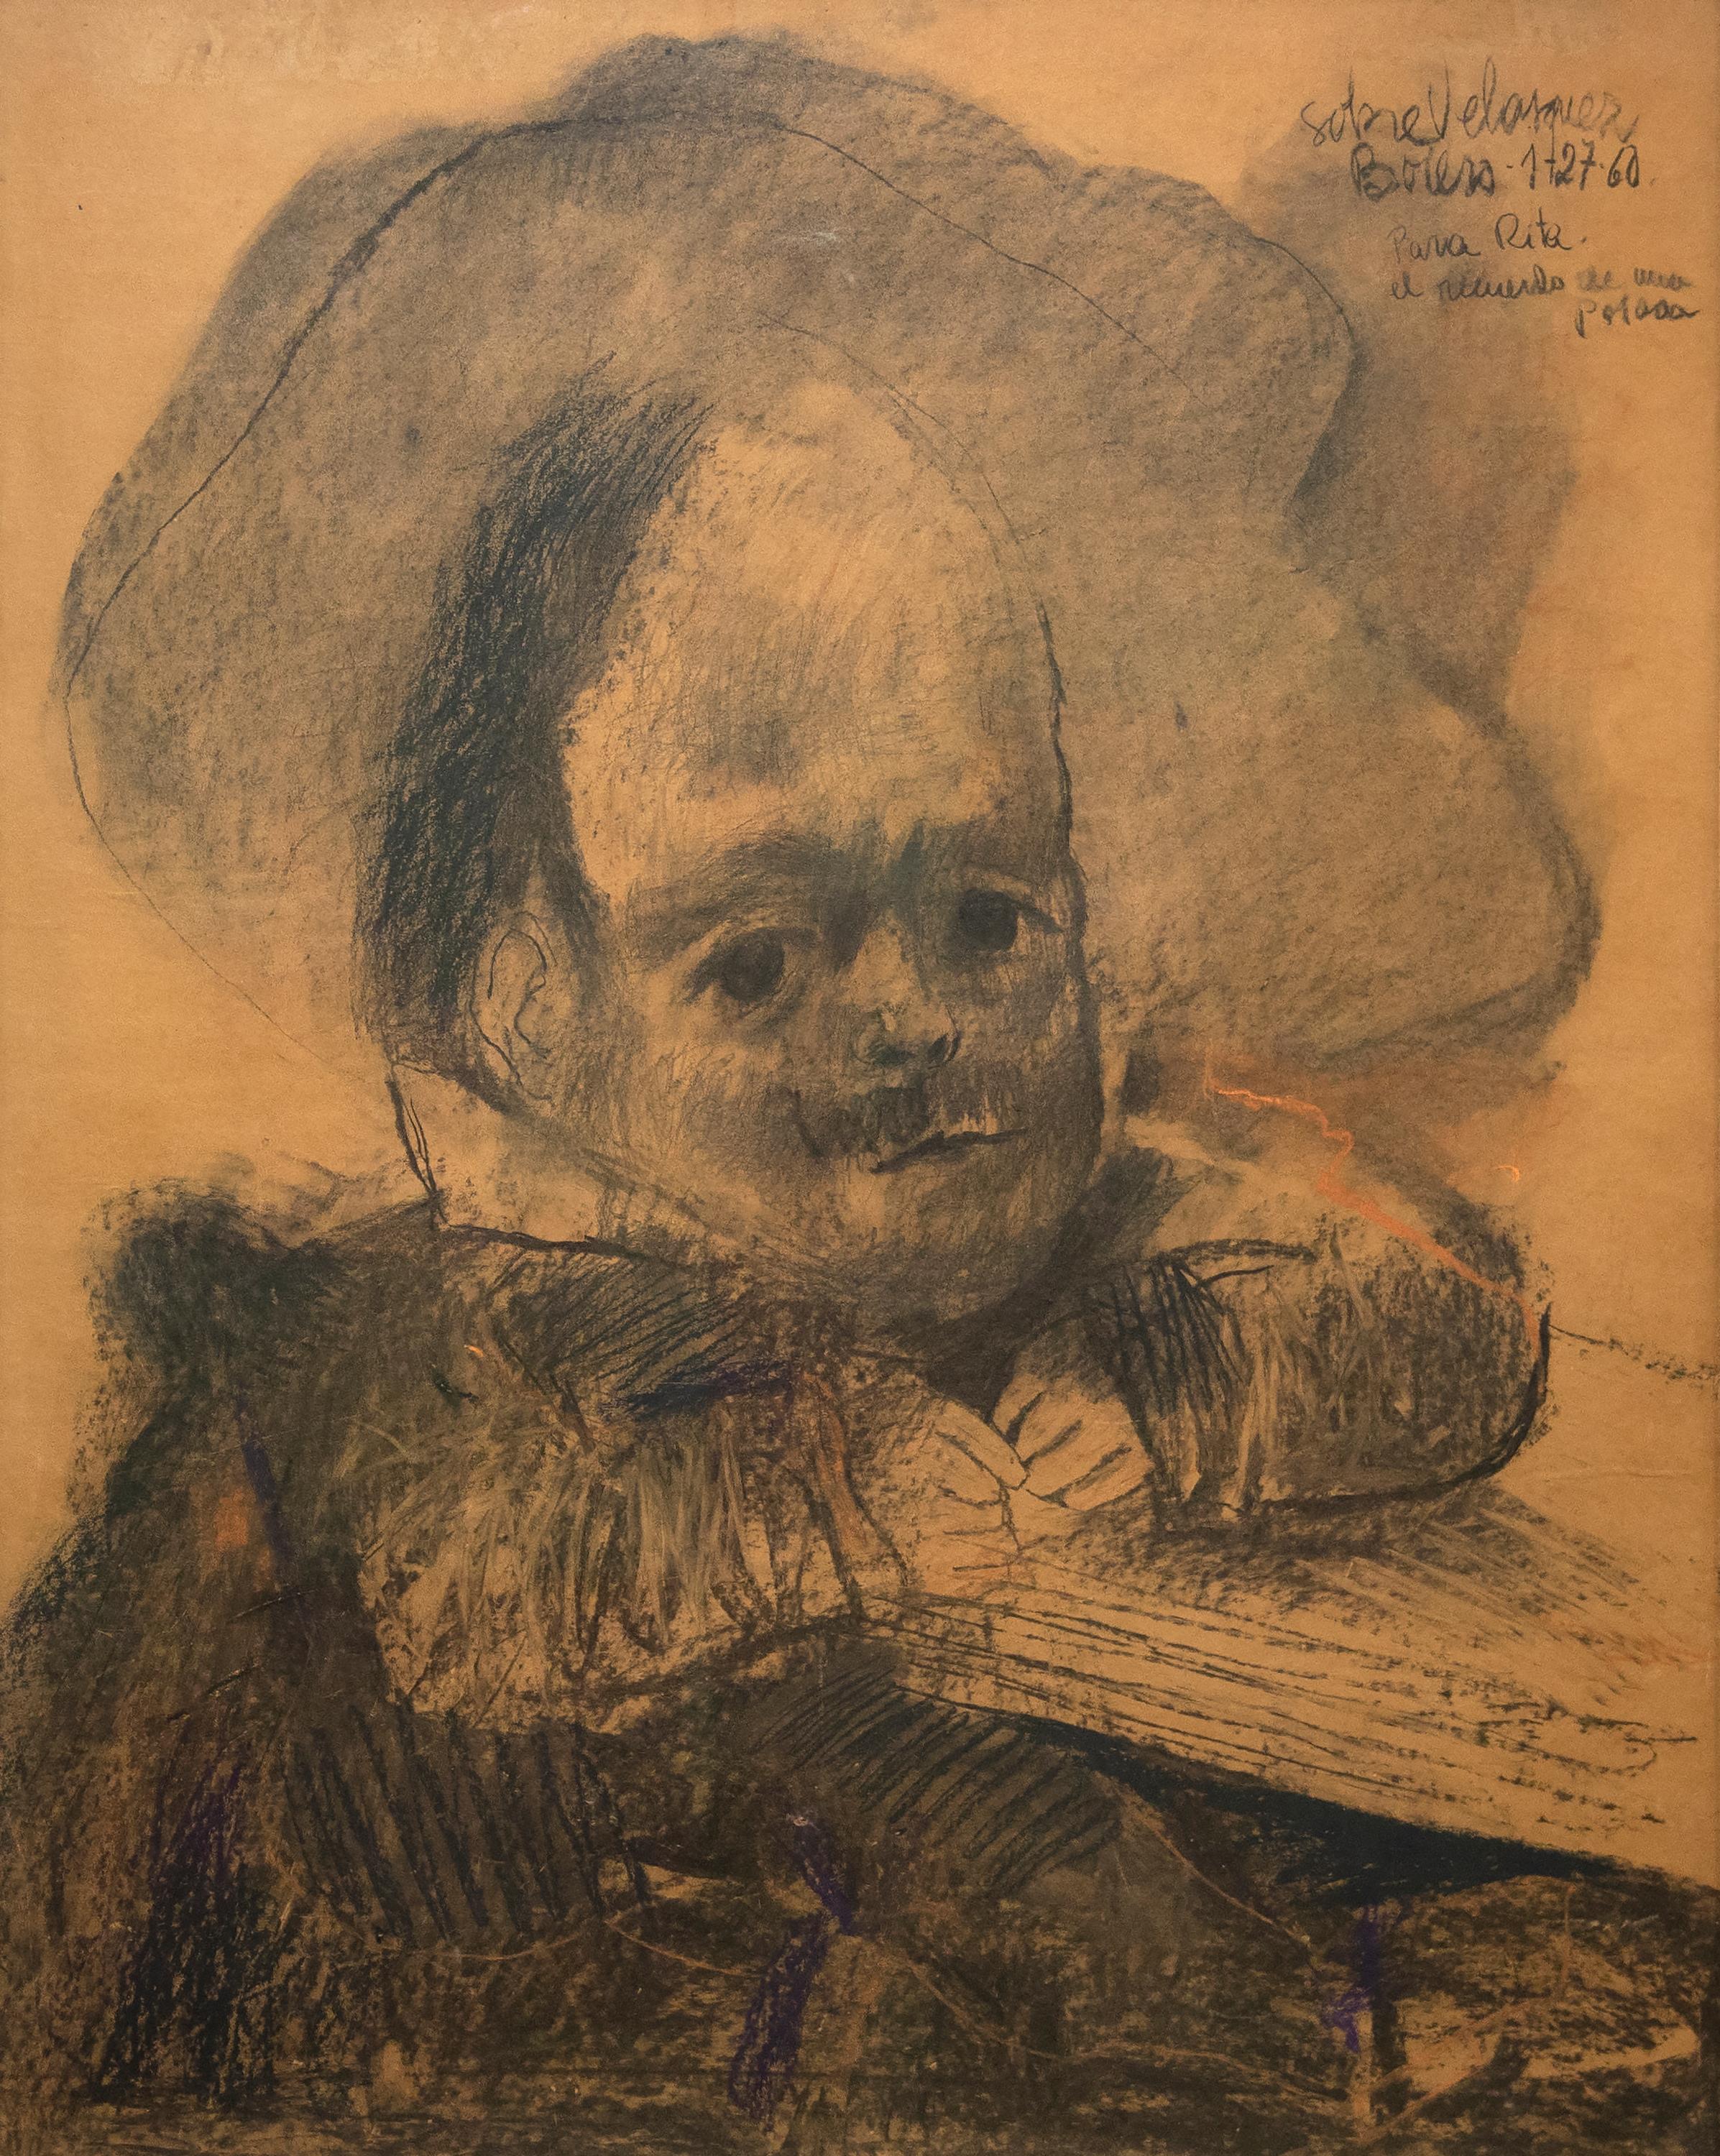 Fernando Botero Portrait - Dibujo a la manera de Velasquez (Drawing in the Manner of Velasquez)